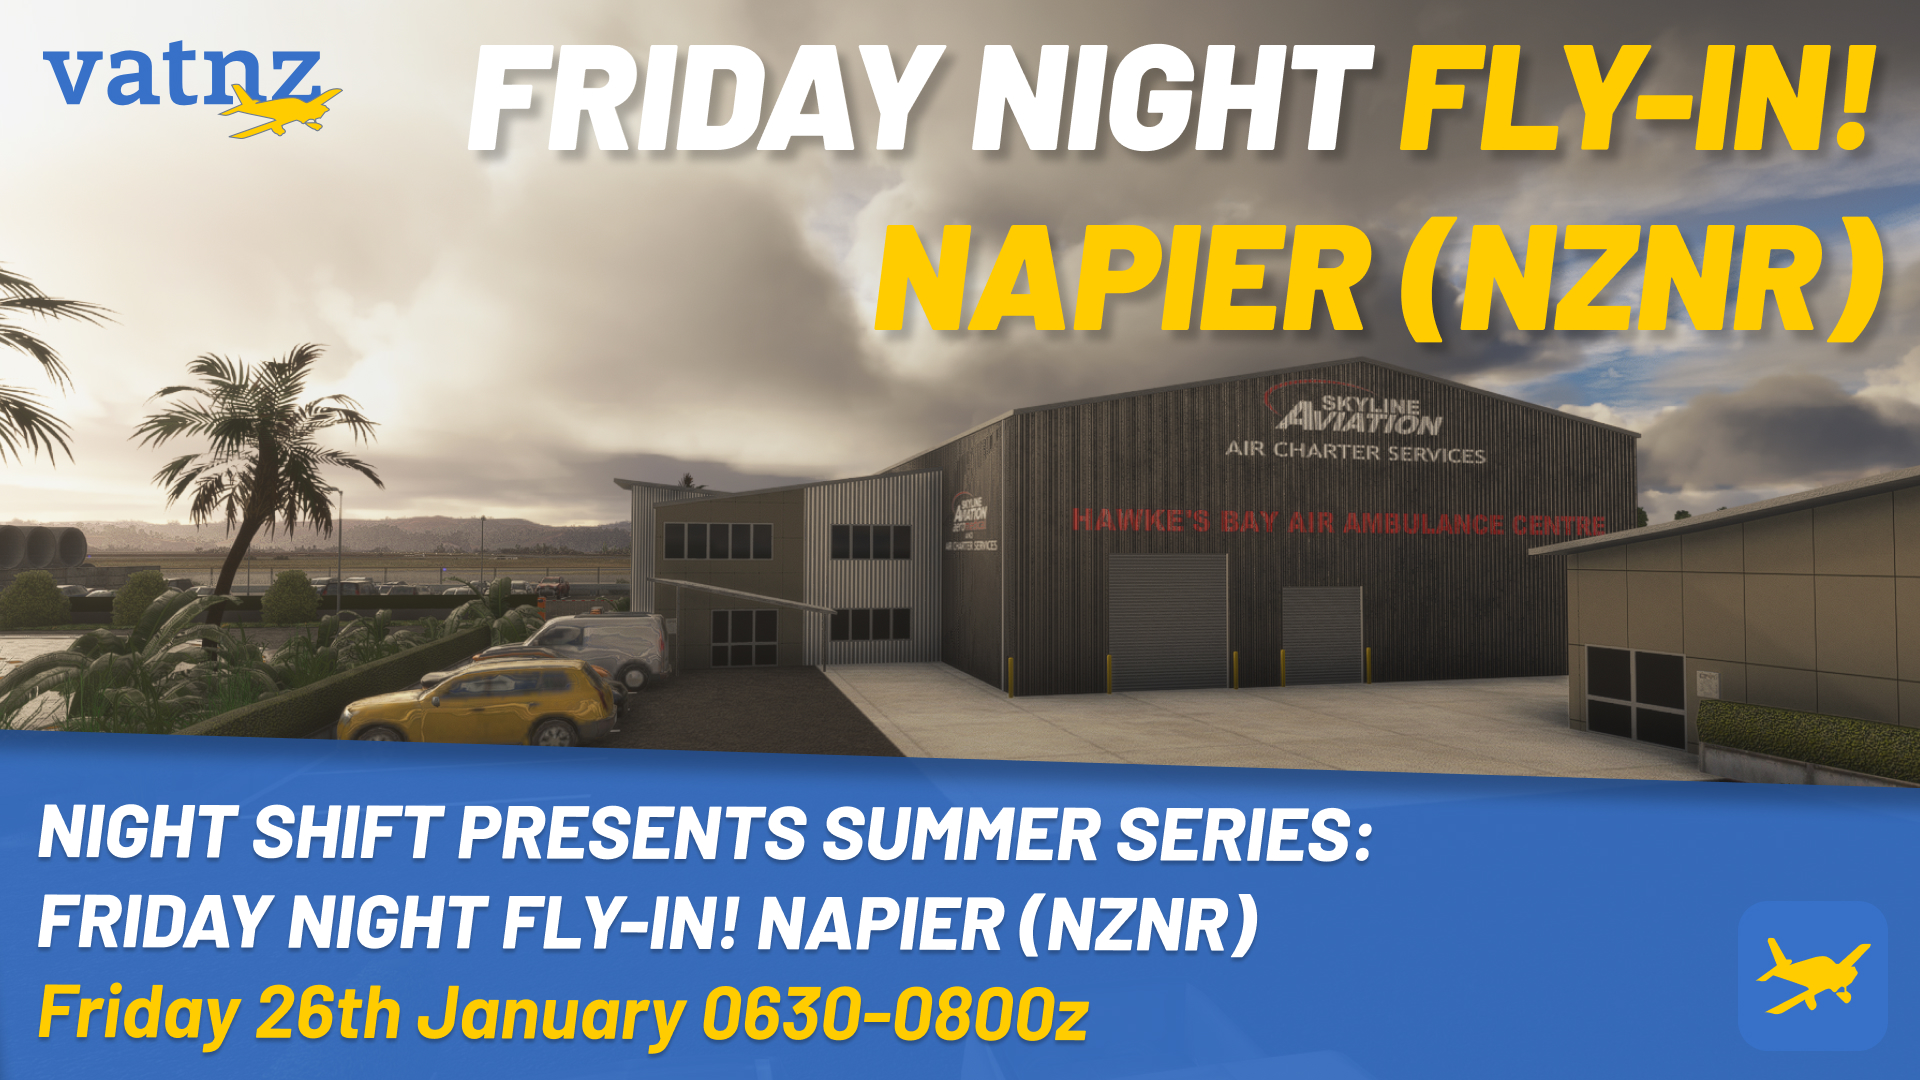 Night Shift Summer Series Presents: Friday Night Fly-in! Napier